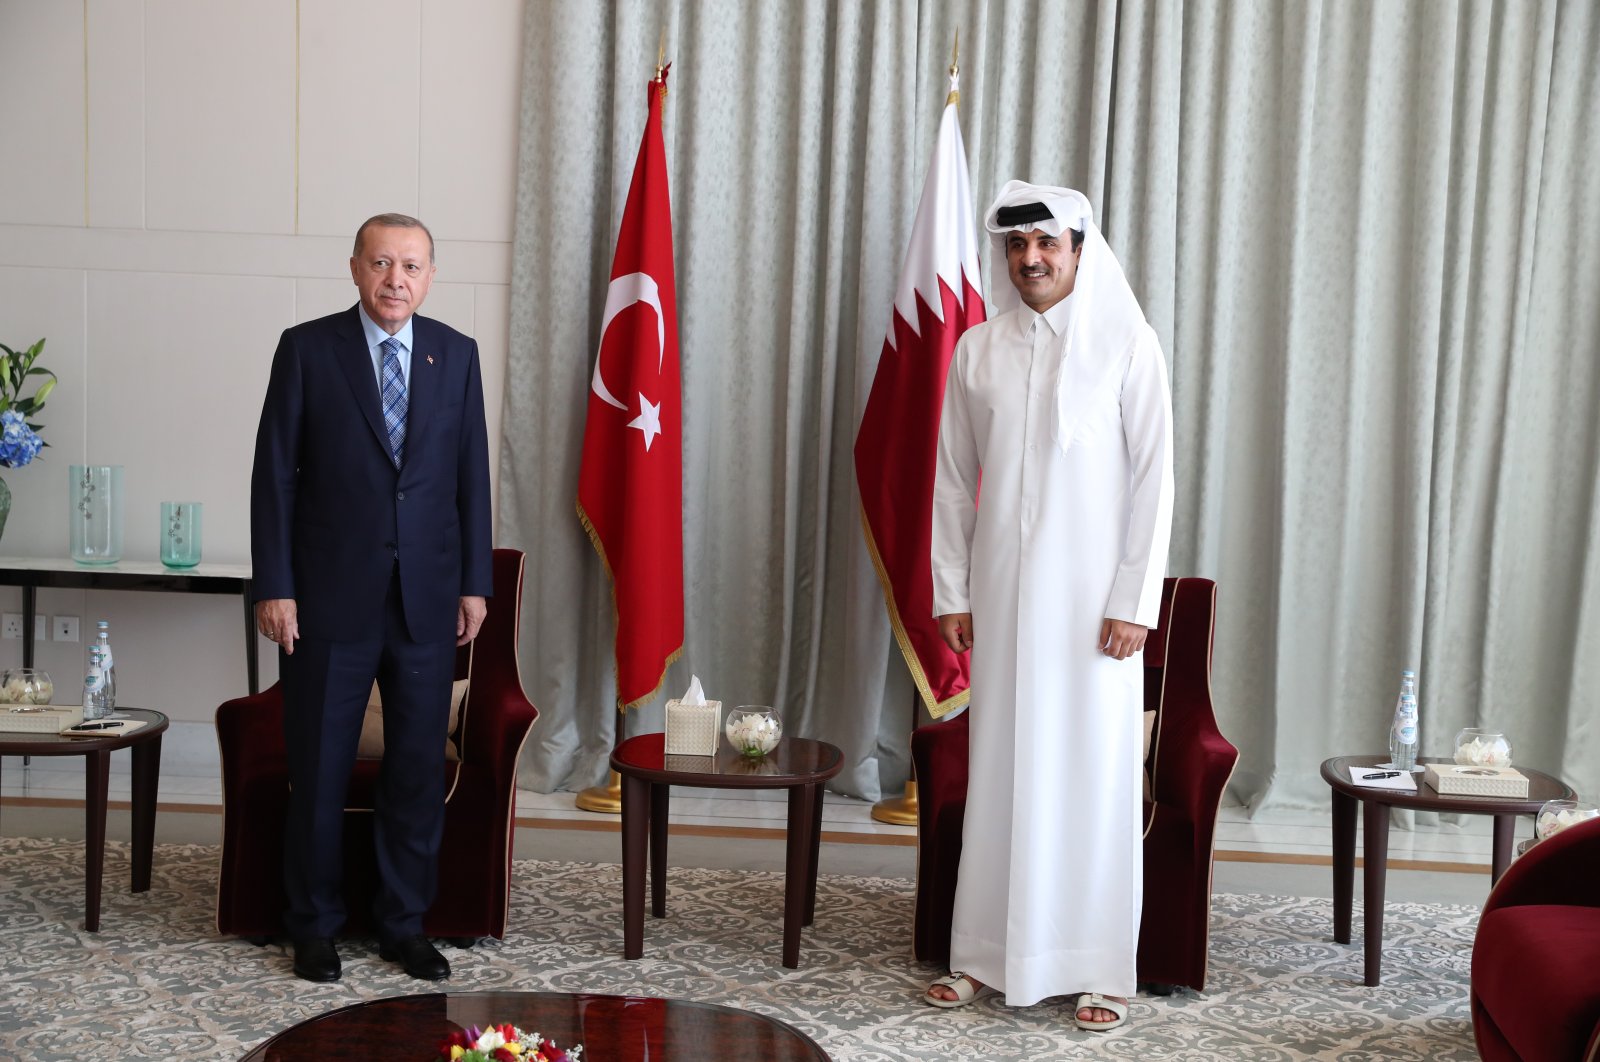 President Recep Tayyip Erdoğan meets with Qatar's Emir Sheikh Tamim bin Hamad Al Thani in Doha, Qatar, July 2, 2020. (AA Photo)